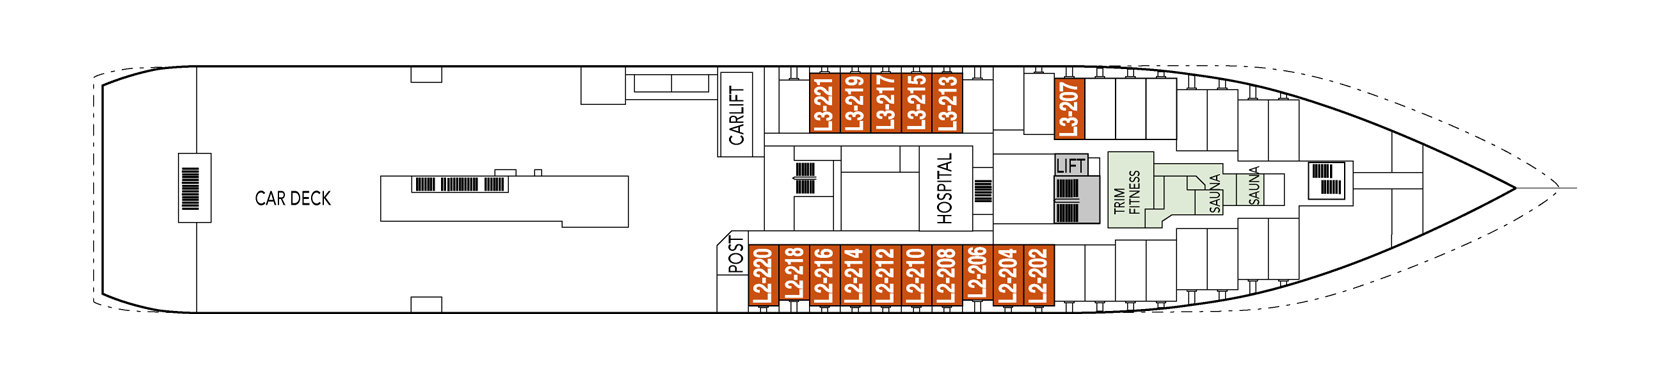 1548636384.3603_d272_Hurtigruten MS Nordkapp Deck Plans Deck 2.png